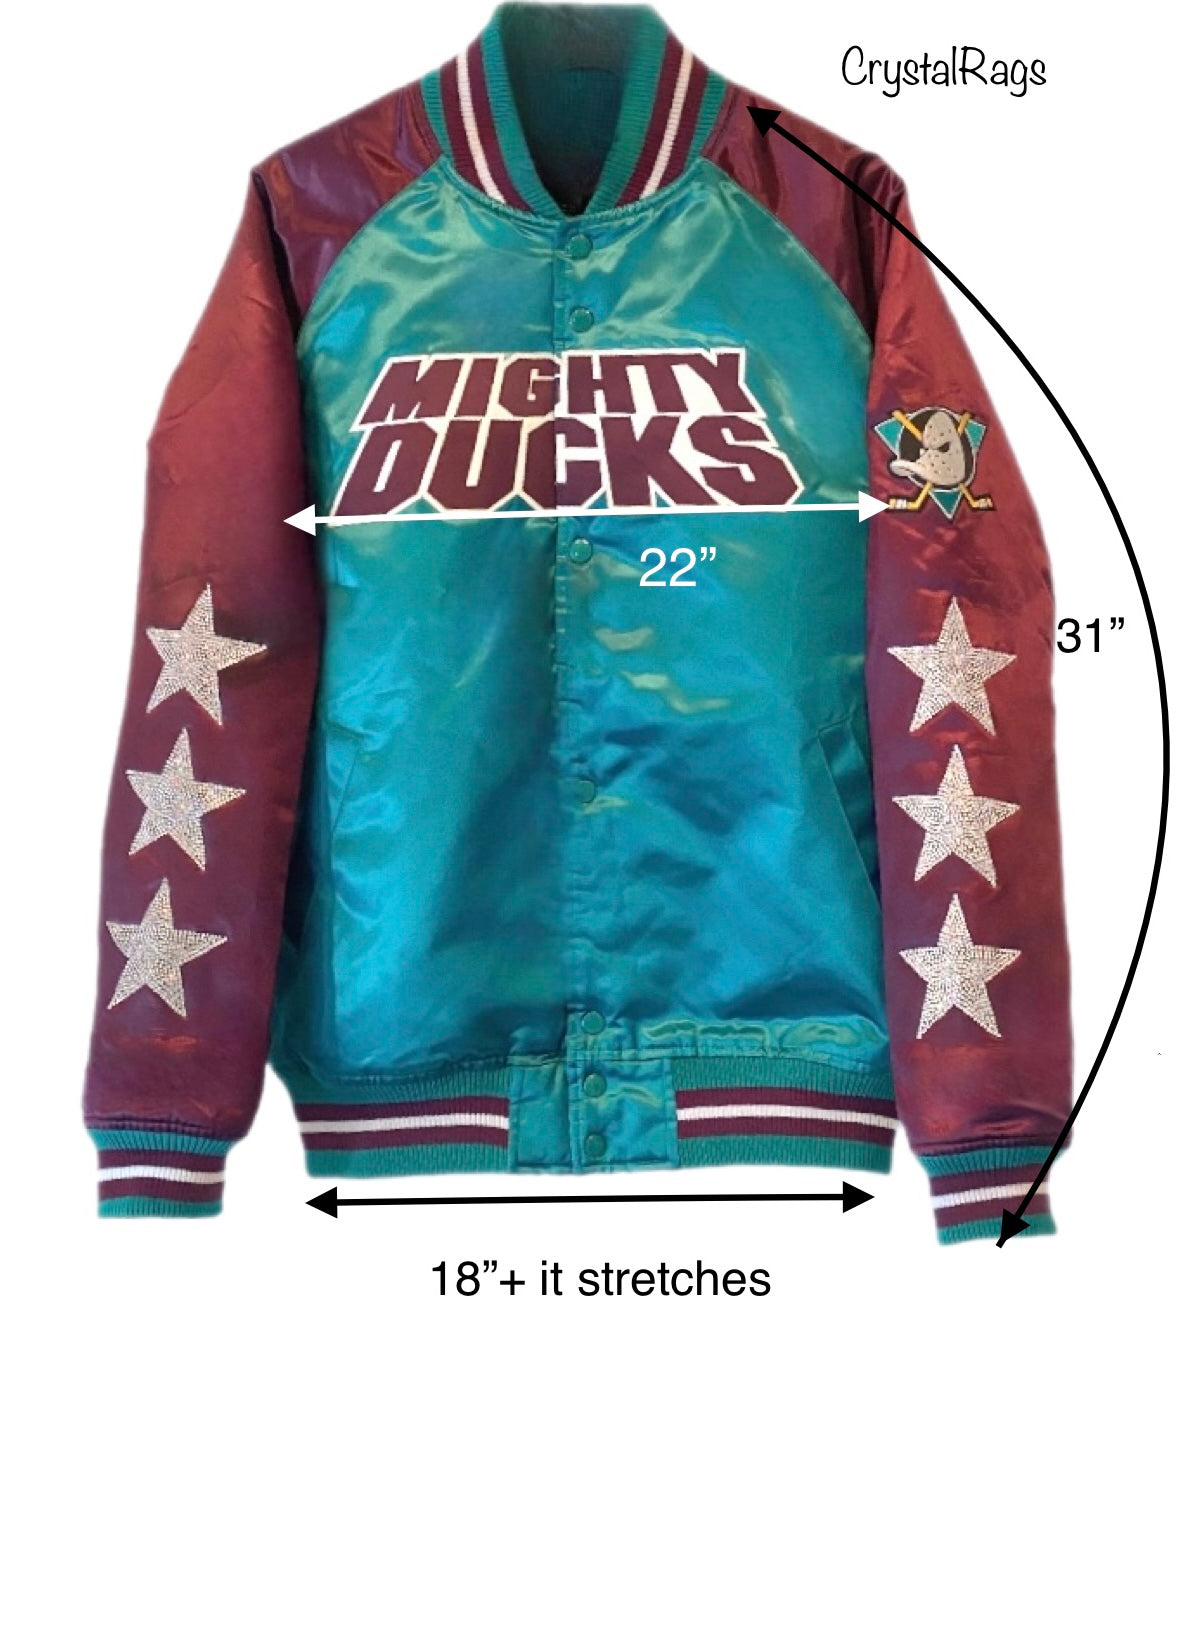 NHL Mighty Ducks Jacket 